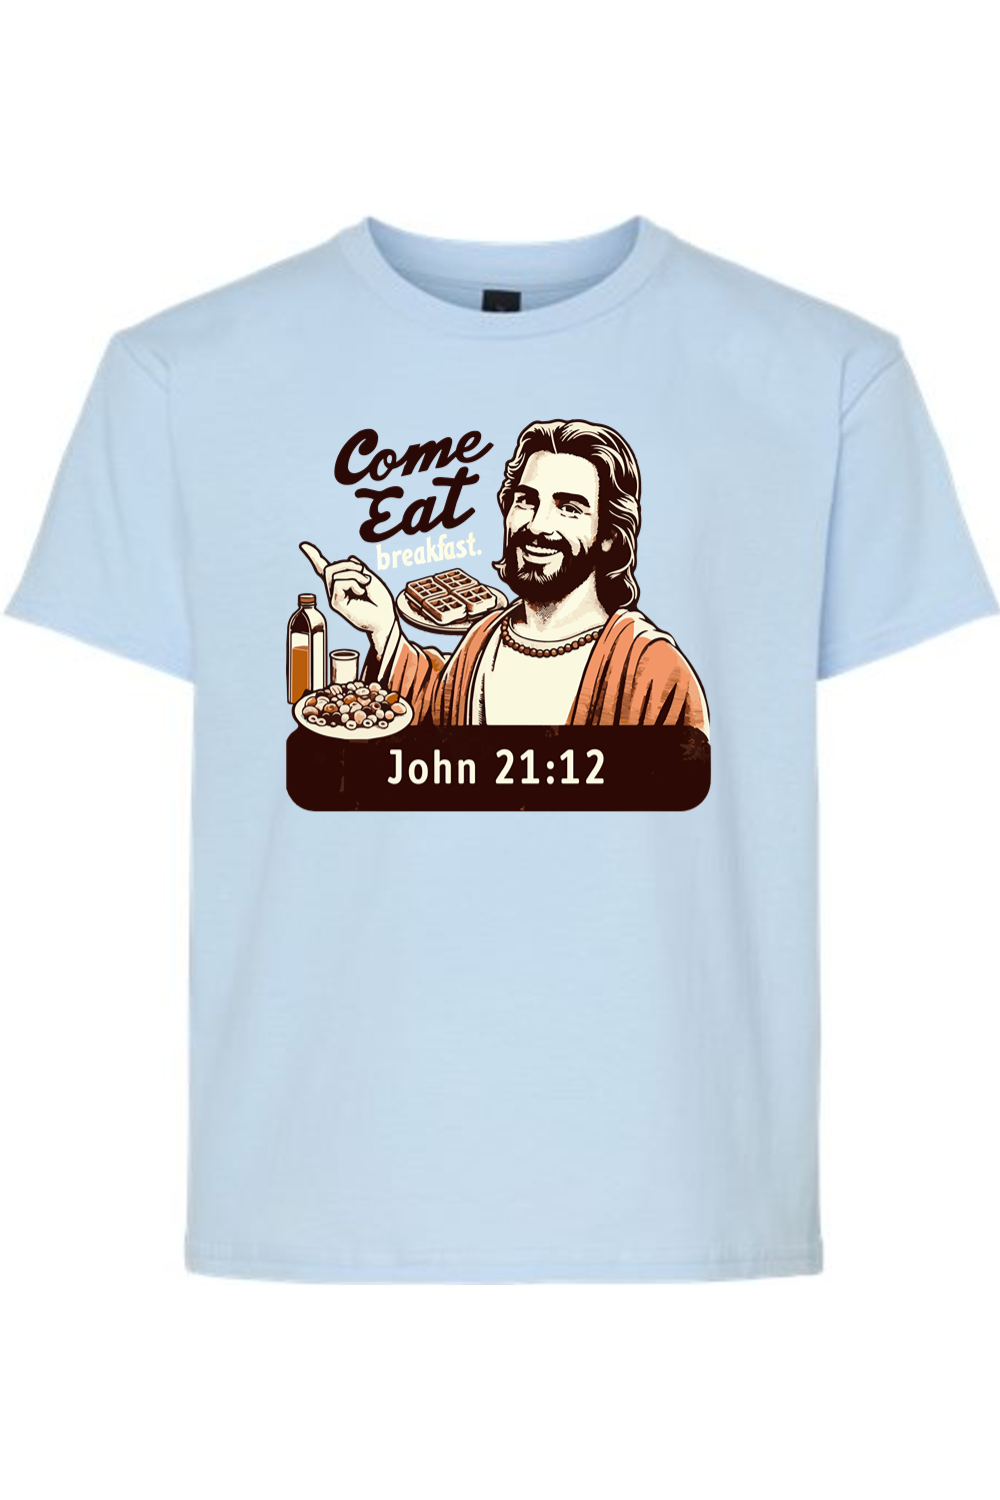 Come Eat Breakfast - John 21:12 Youth T-Shirt